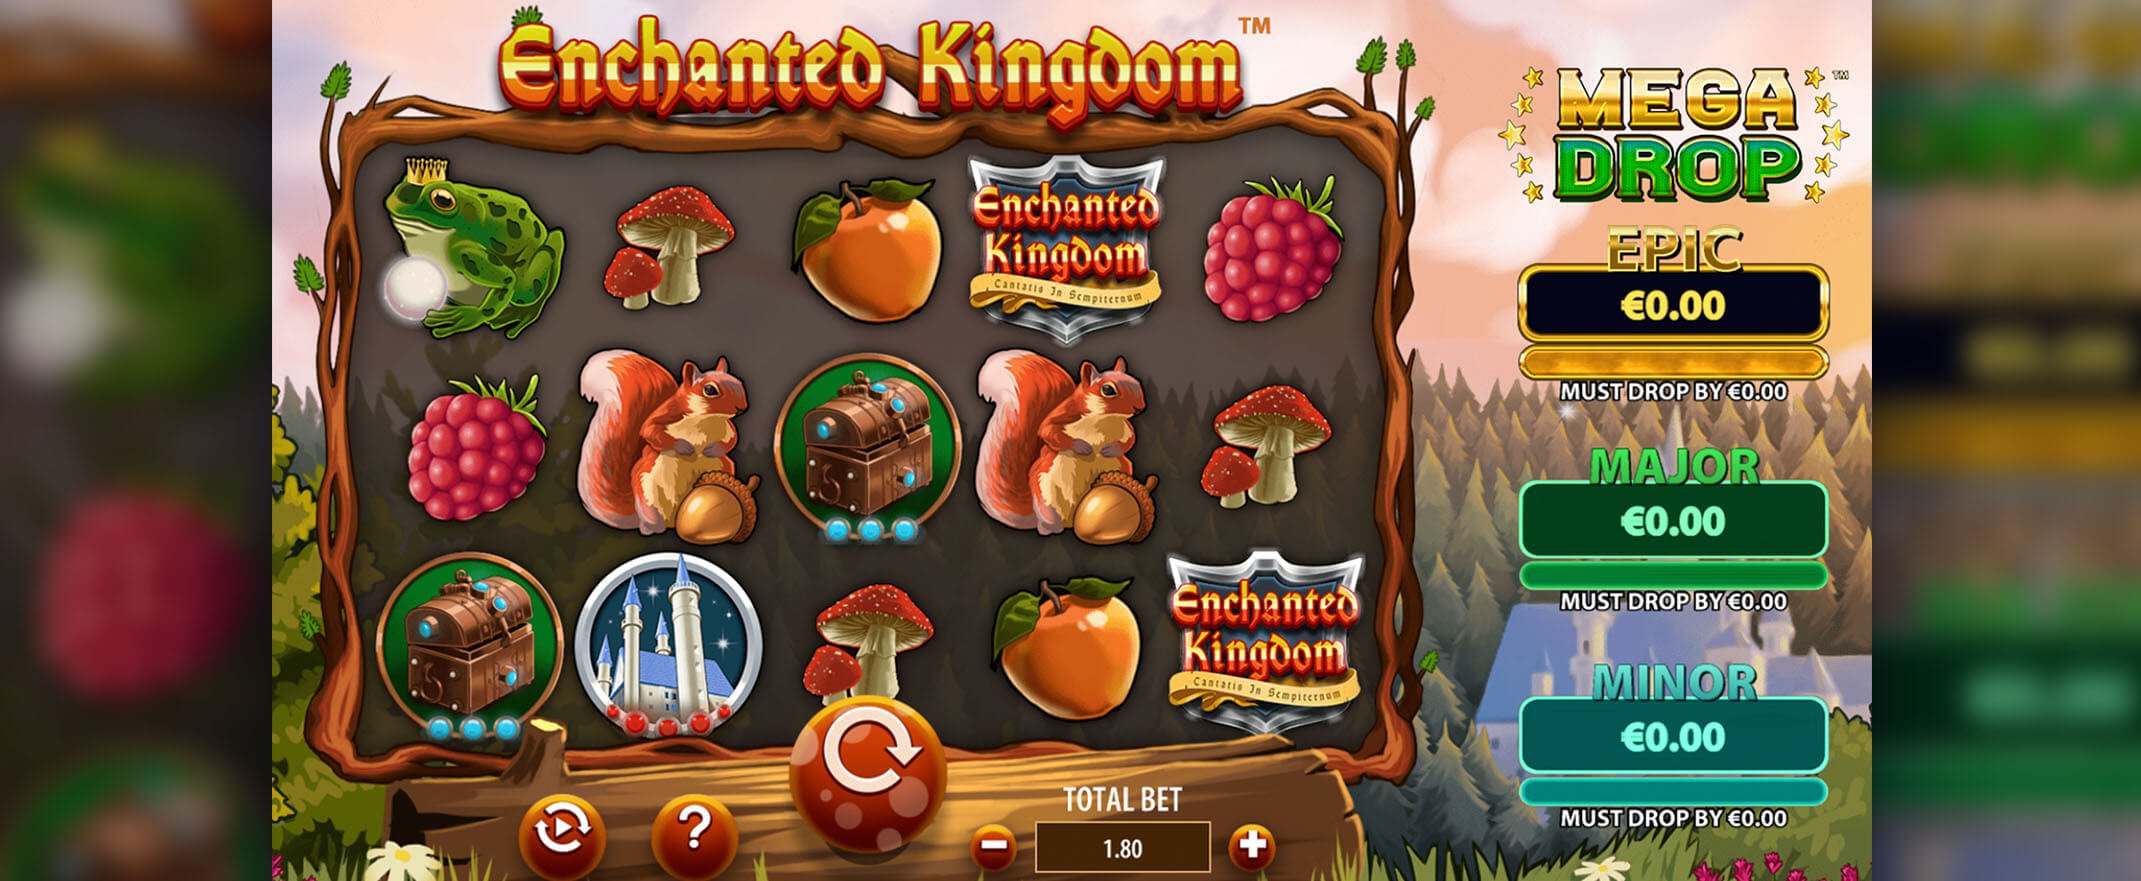 Enchanted Kingdom slot from SG Digital